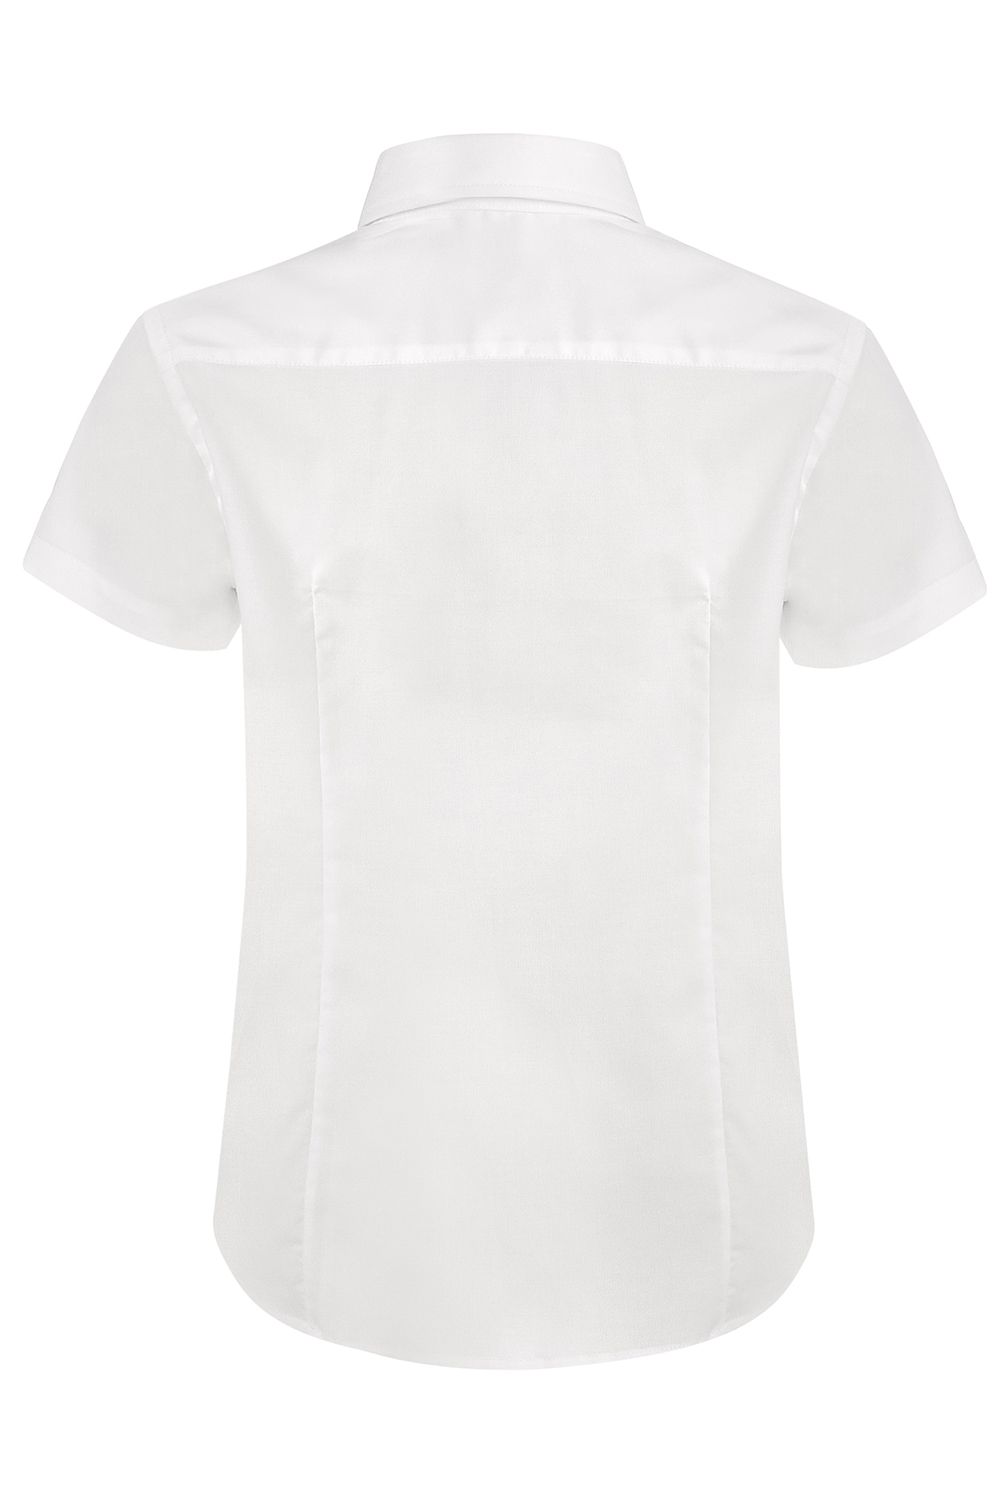 Рубашка Silver Spoon, размер 164, цвет белый SSFSB-929-13947-219 - фото 2